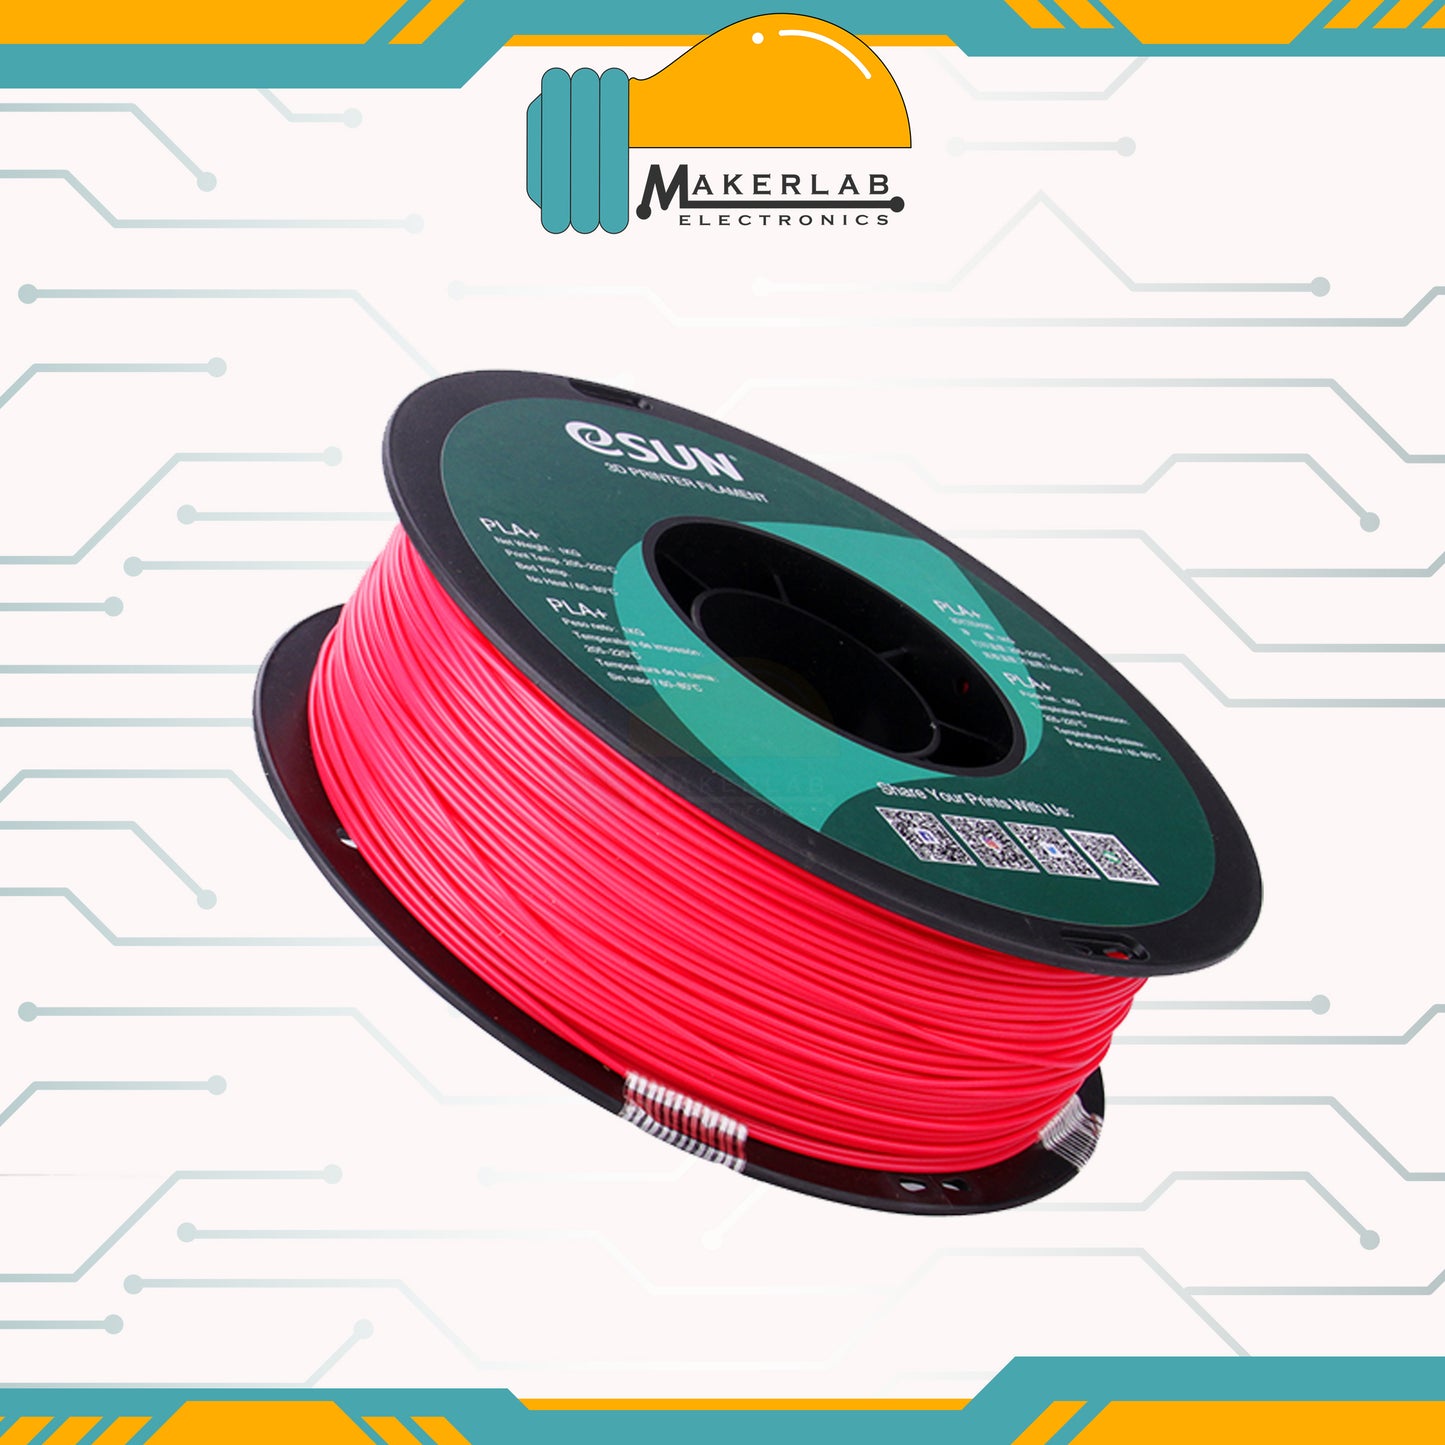 eSUN PLA+ White Black Grey Red Green Blue Yellow Orange  Filament 1.75mm PLA Plus 1KG Spool for Creality 3D Printer